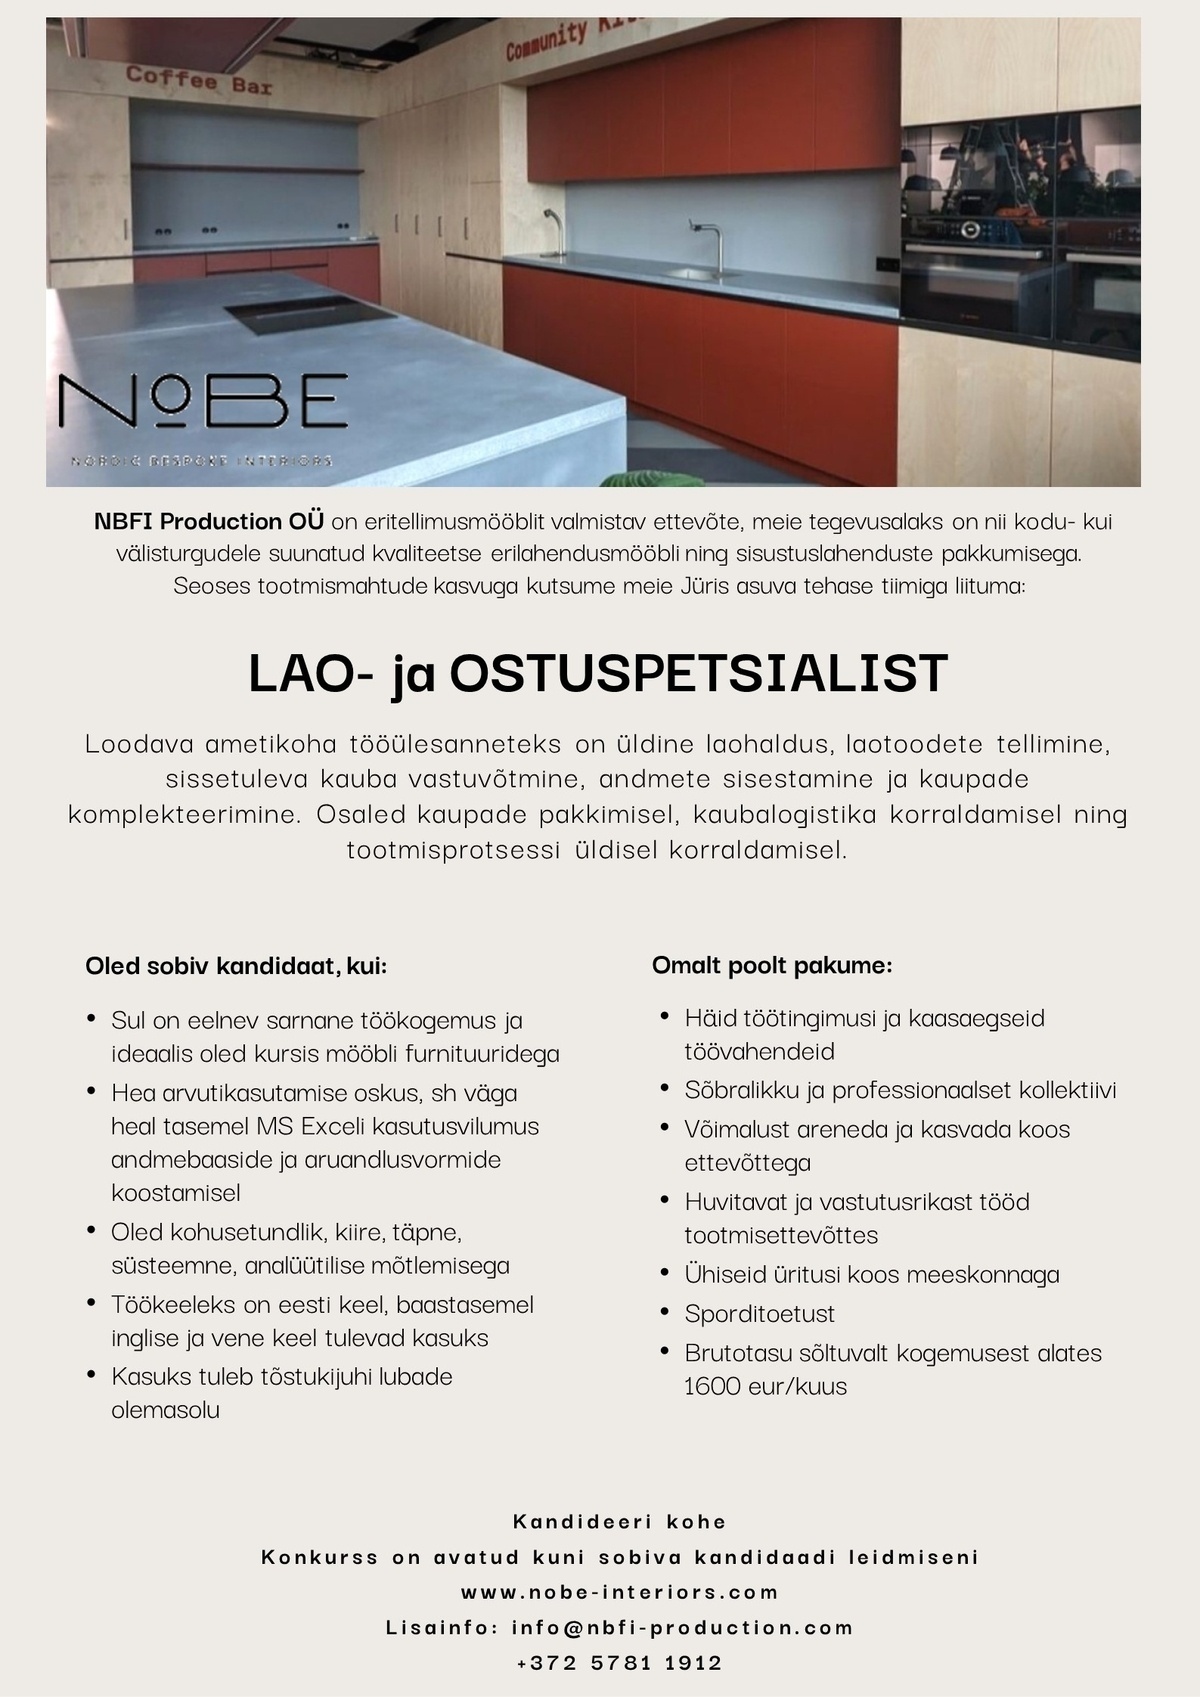 NBFI Production OÜ LAO- ja OSTUSPETSIALIST